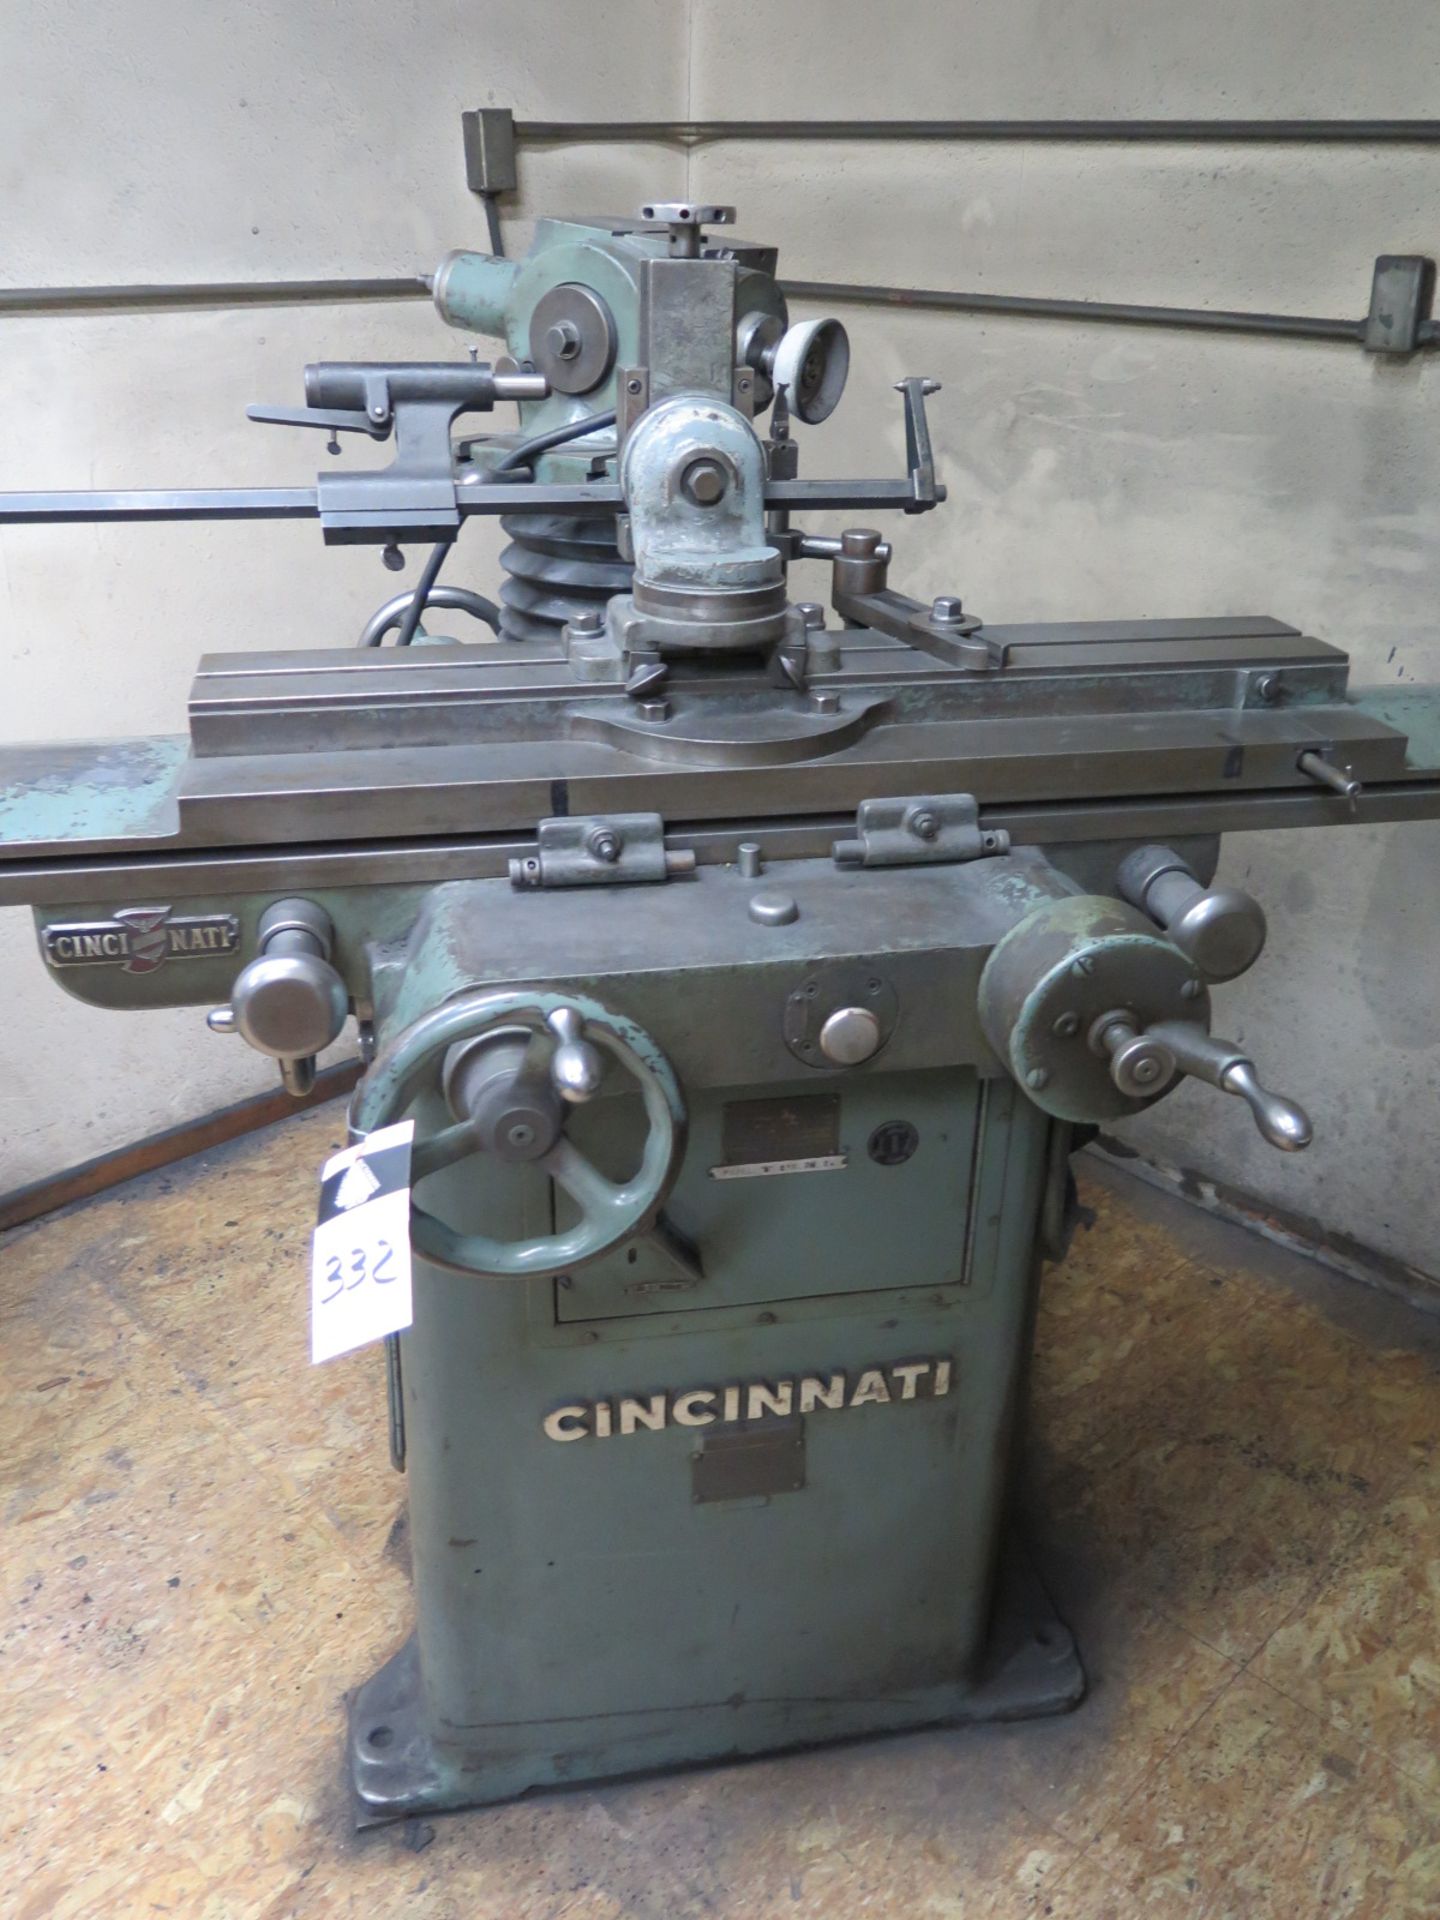 Cincinnati Tool and Cutter Grinder s/n 1D2T1Y-135 w/ Compound Grinding Head, Motorized 5C Work Head - Image 2 of 5